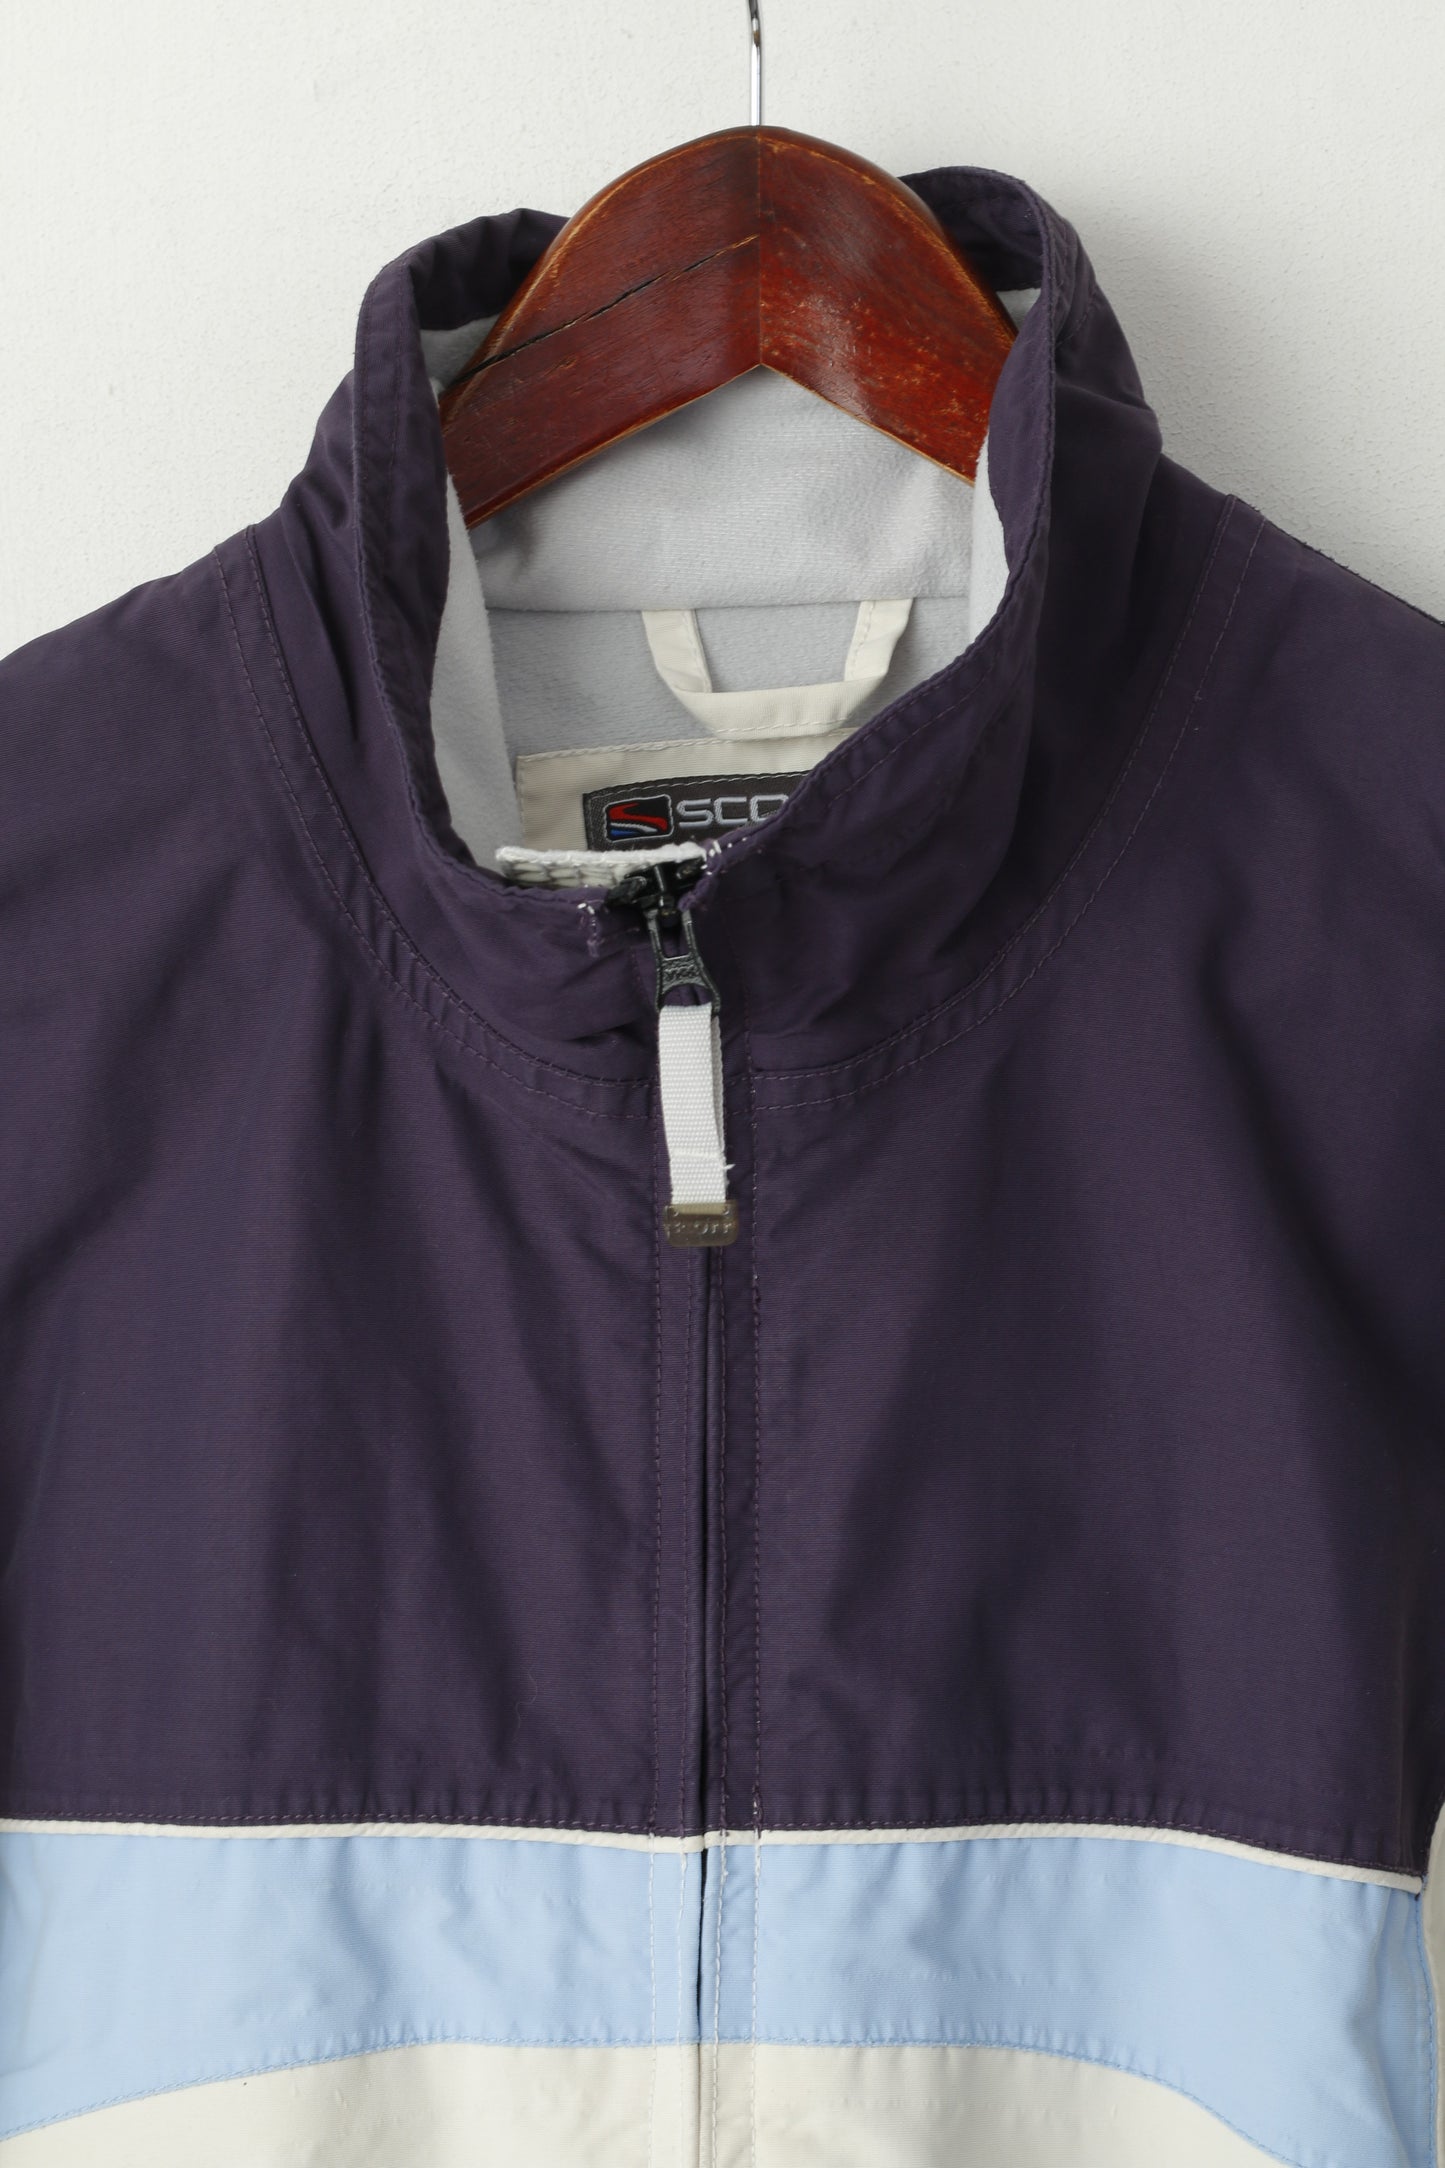 Scott USA Women 8 XS Jacket Beige Nylon Wateproof Ski Outdoor Full Zipper Top